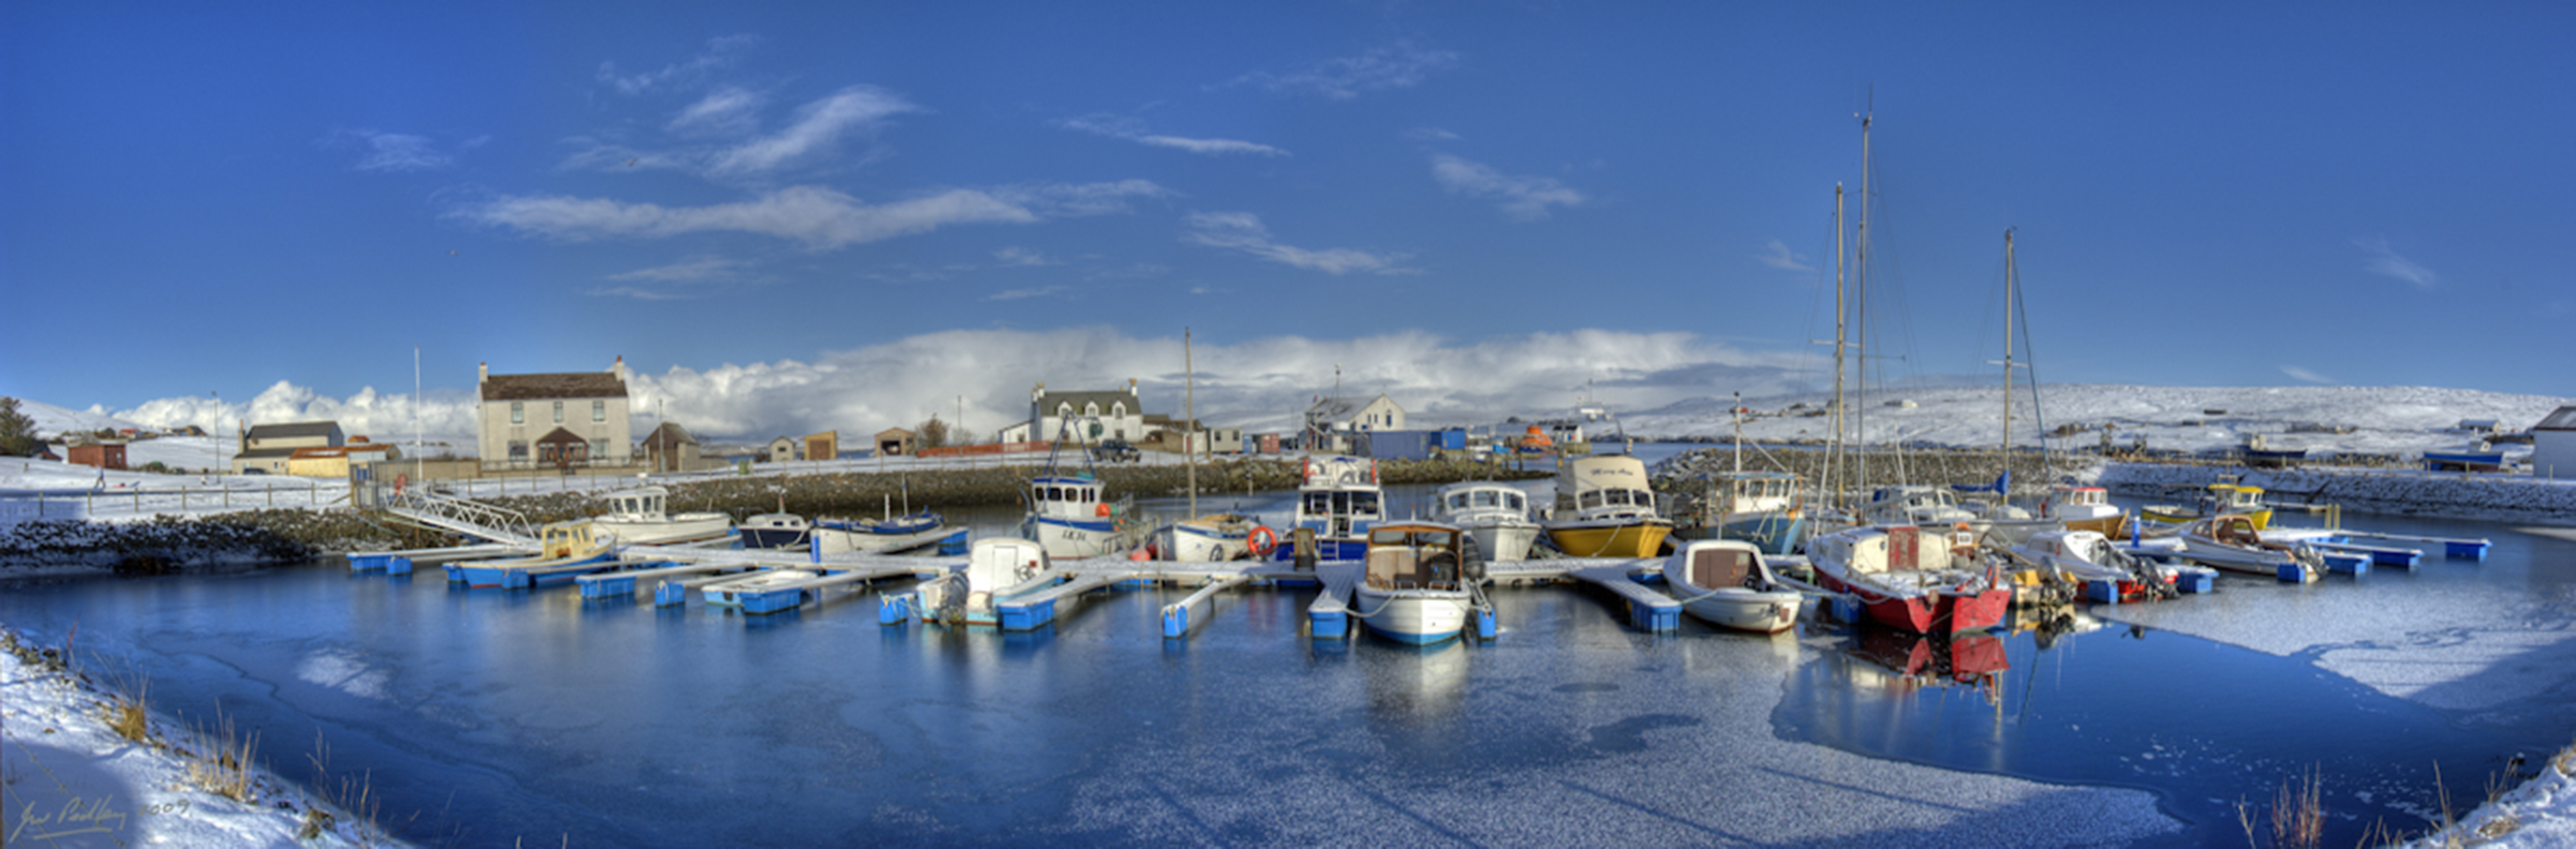 Aith Marina in Winter, Shetland Ref: sanx2_0801b slides/sanx2_0801b.jpg